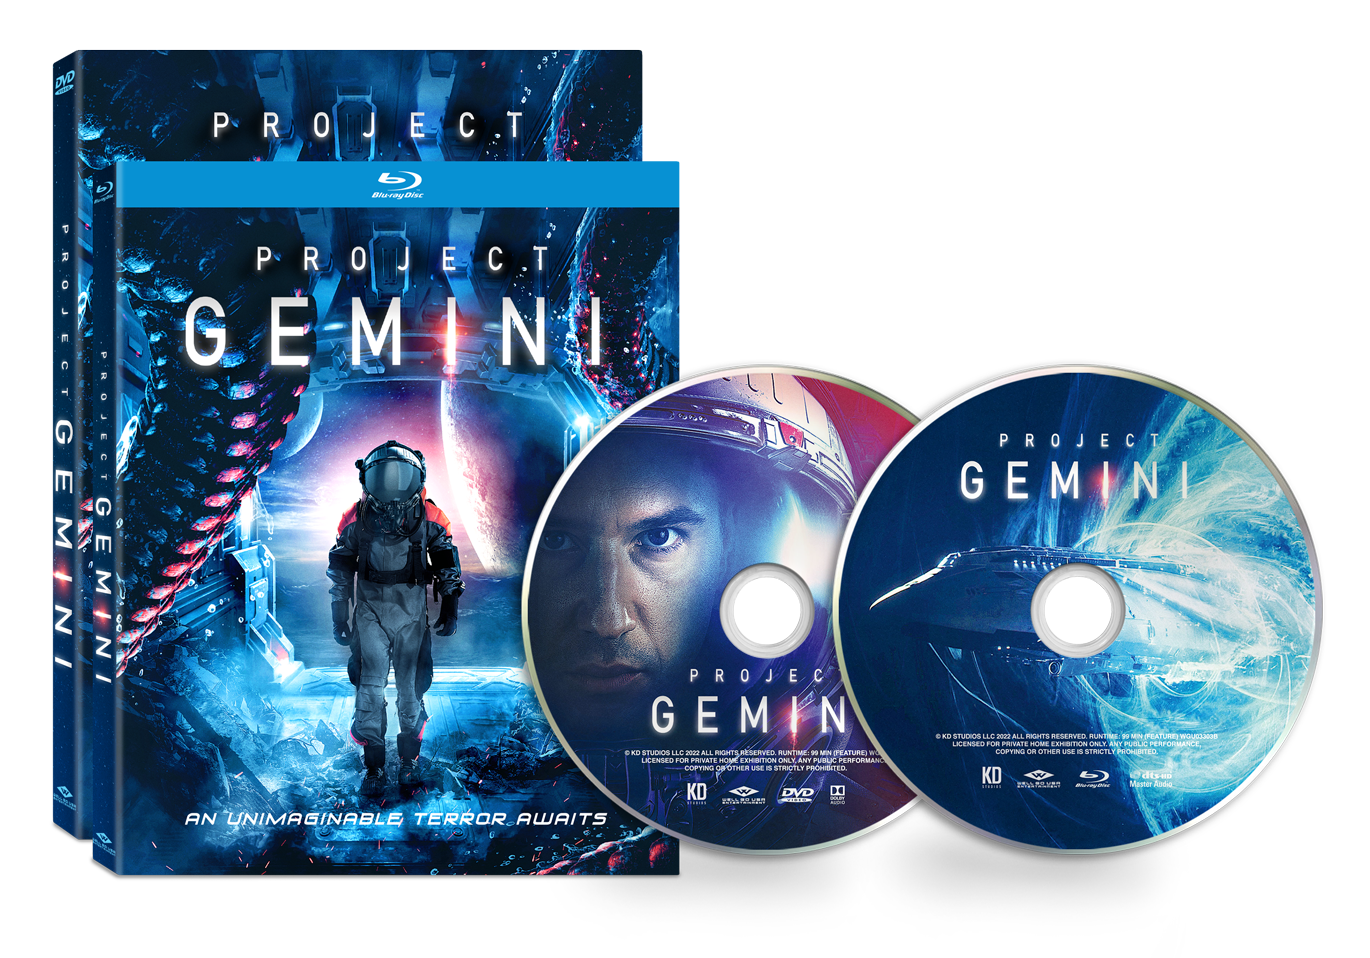 PROJECT GEMINI Arrives on Blu-ray, DVD & Digital March 15